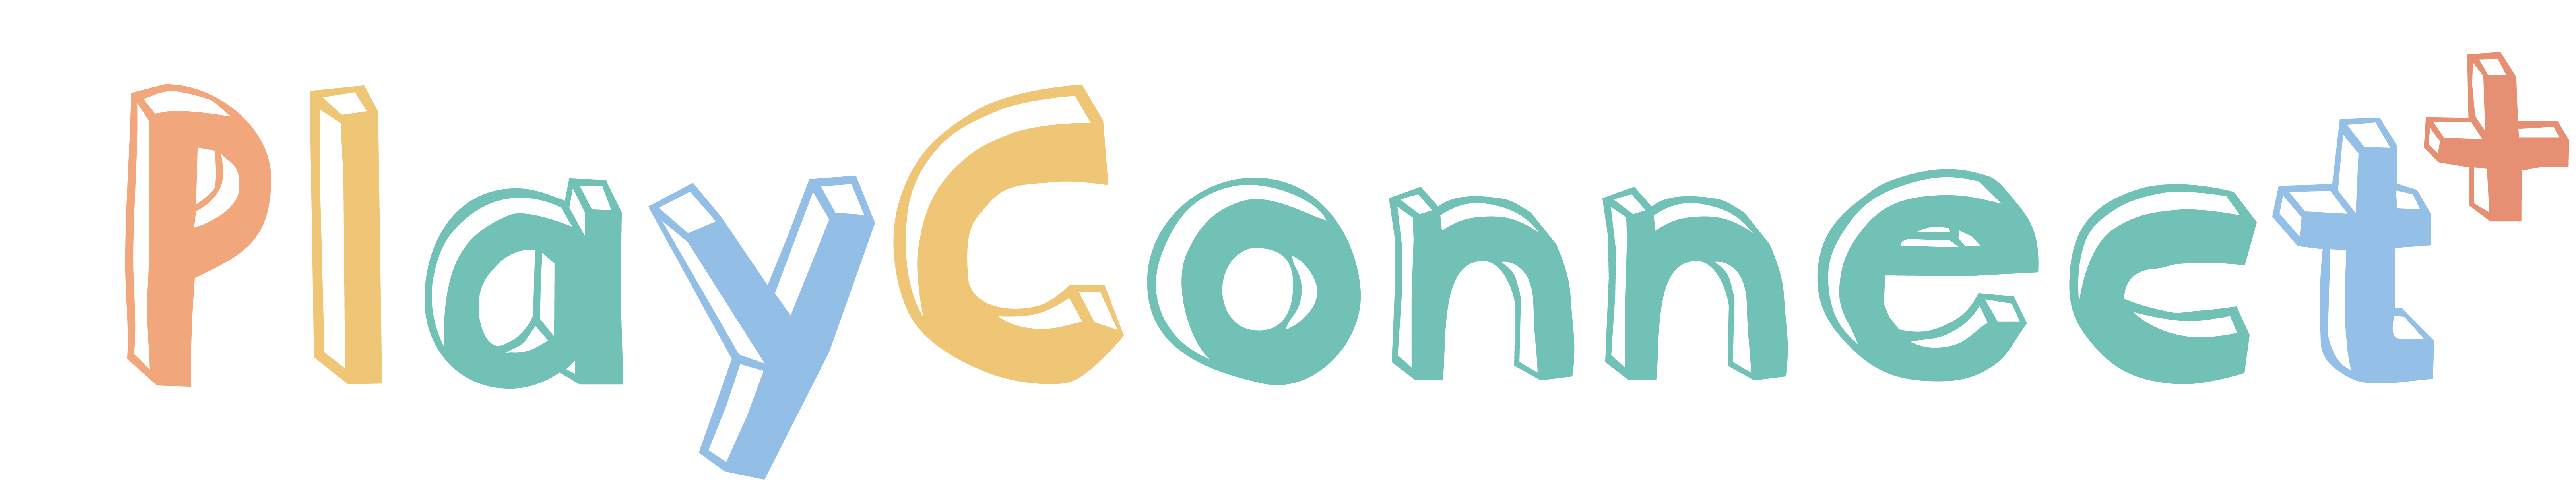 PlayConnect+Plus Logo revised 20 April